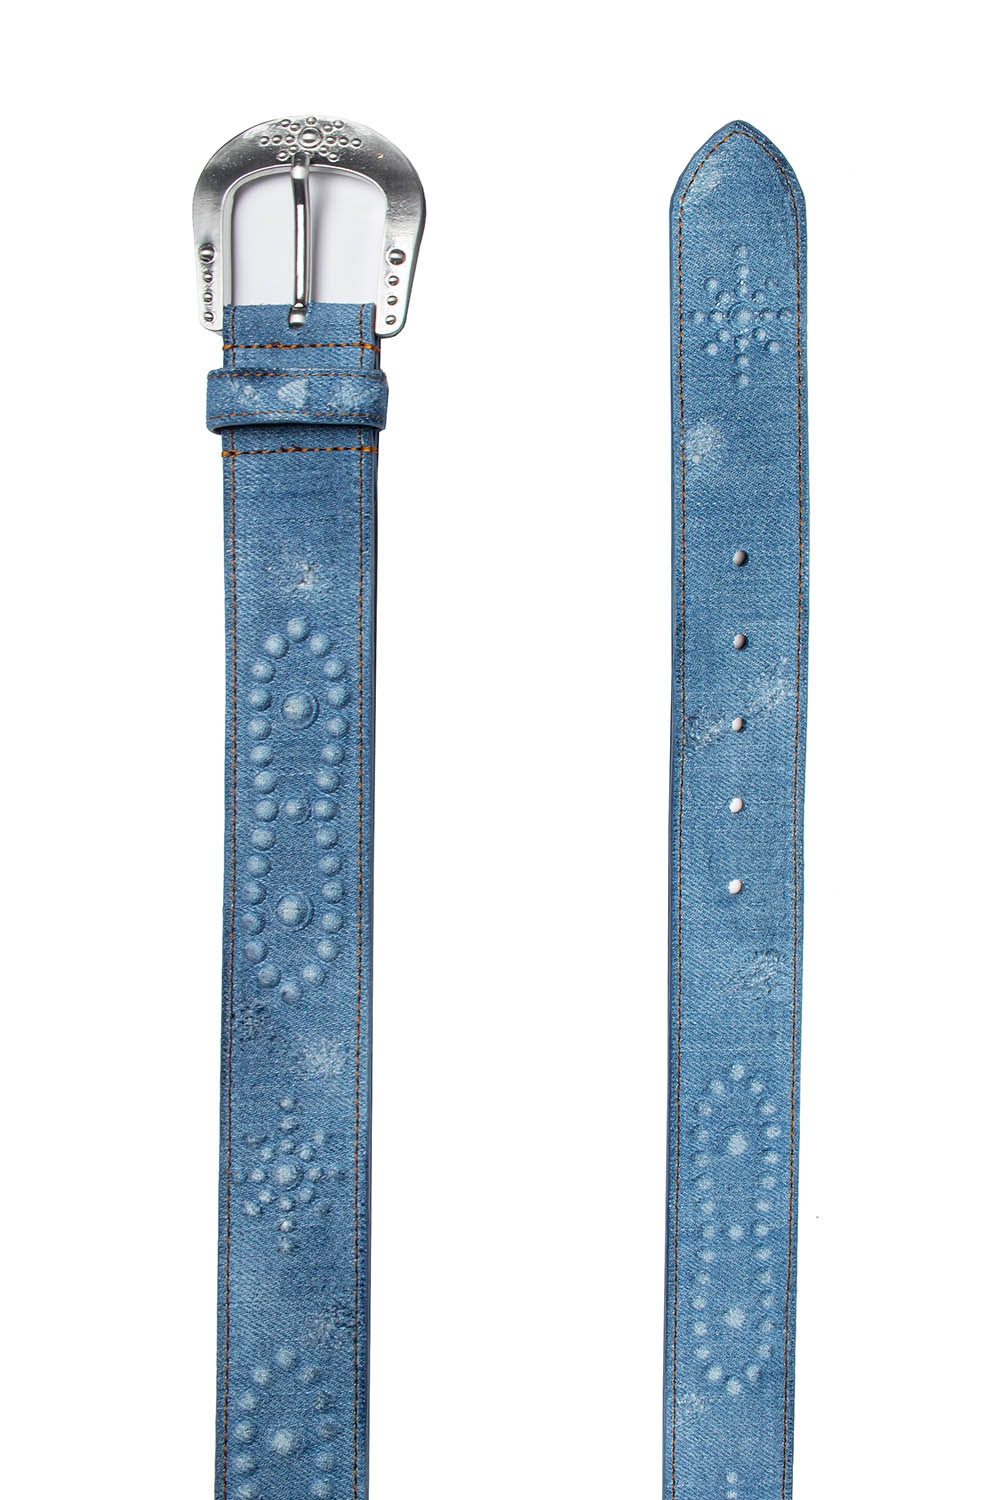 MIRAGE DENIM BELT Denim belt, nickel free buckle, with HTC shield logo rivet. Height: 4 cm. Composition: 100% Cotton. Made in Italy. HTC LOS ANGELES